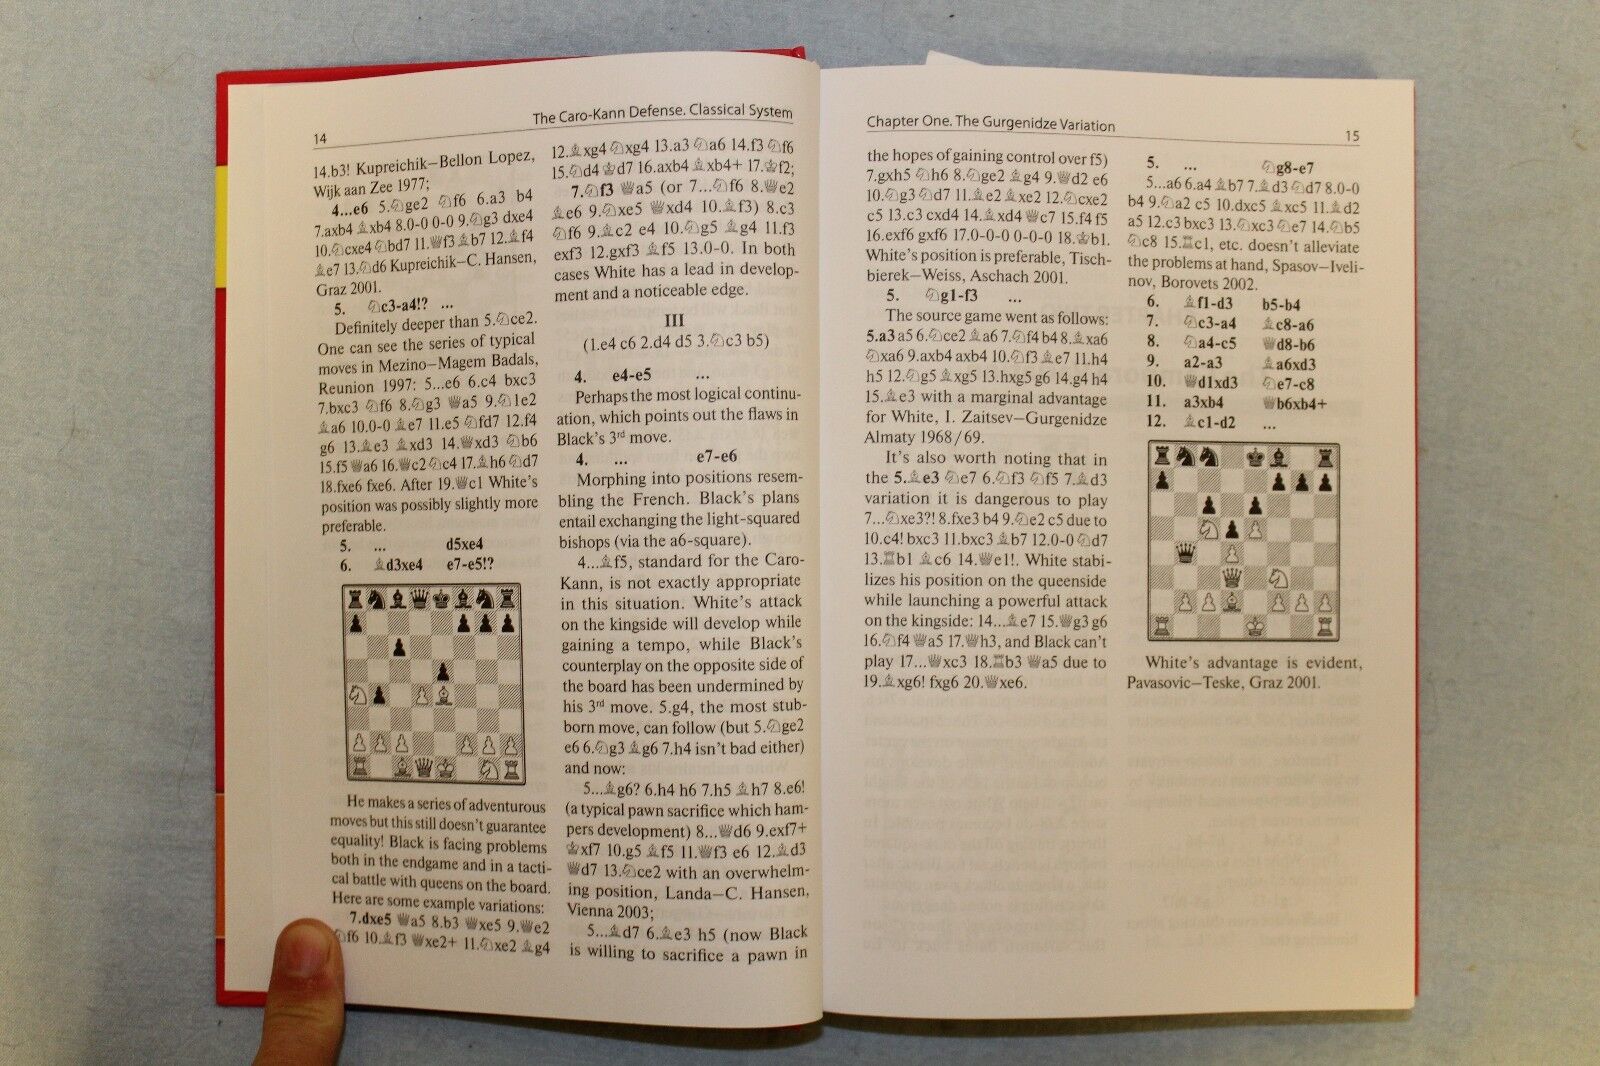 11053.Chess Book: Anatoly Karpov, Mikhail Podgaets. The Caro-Kann Defense. 2016